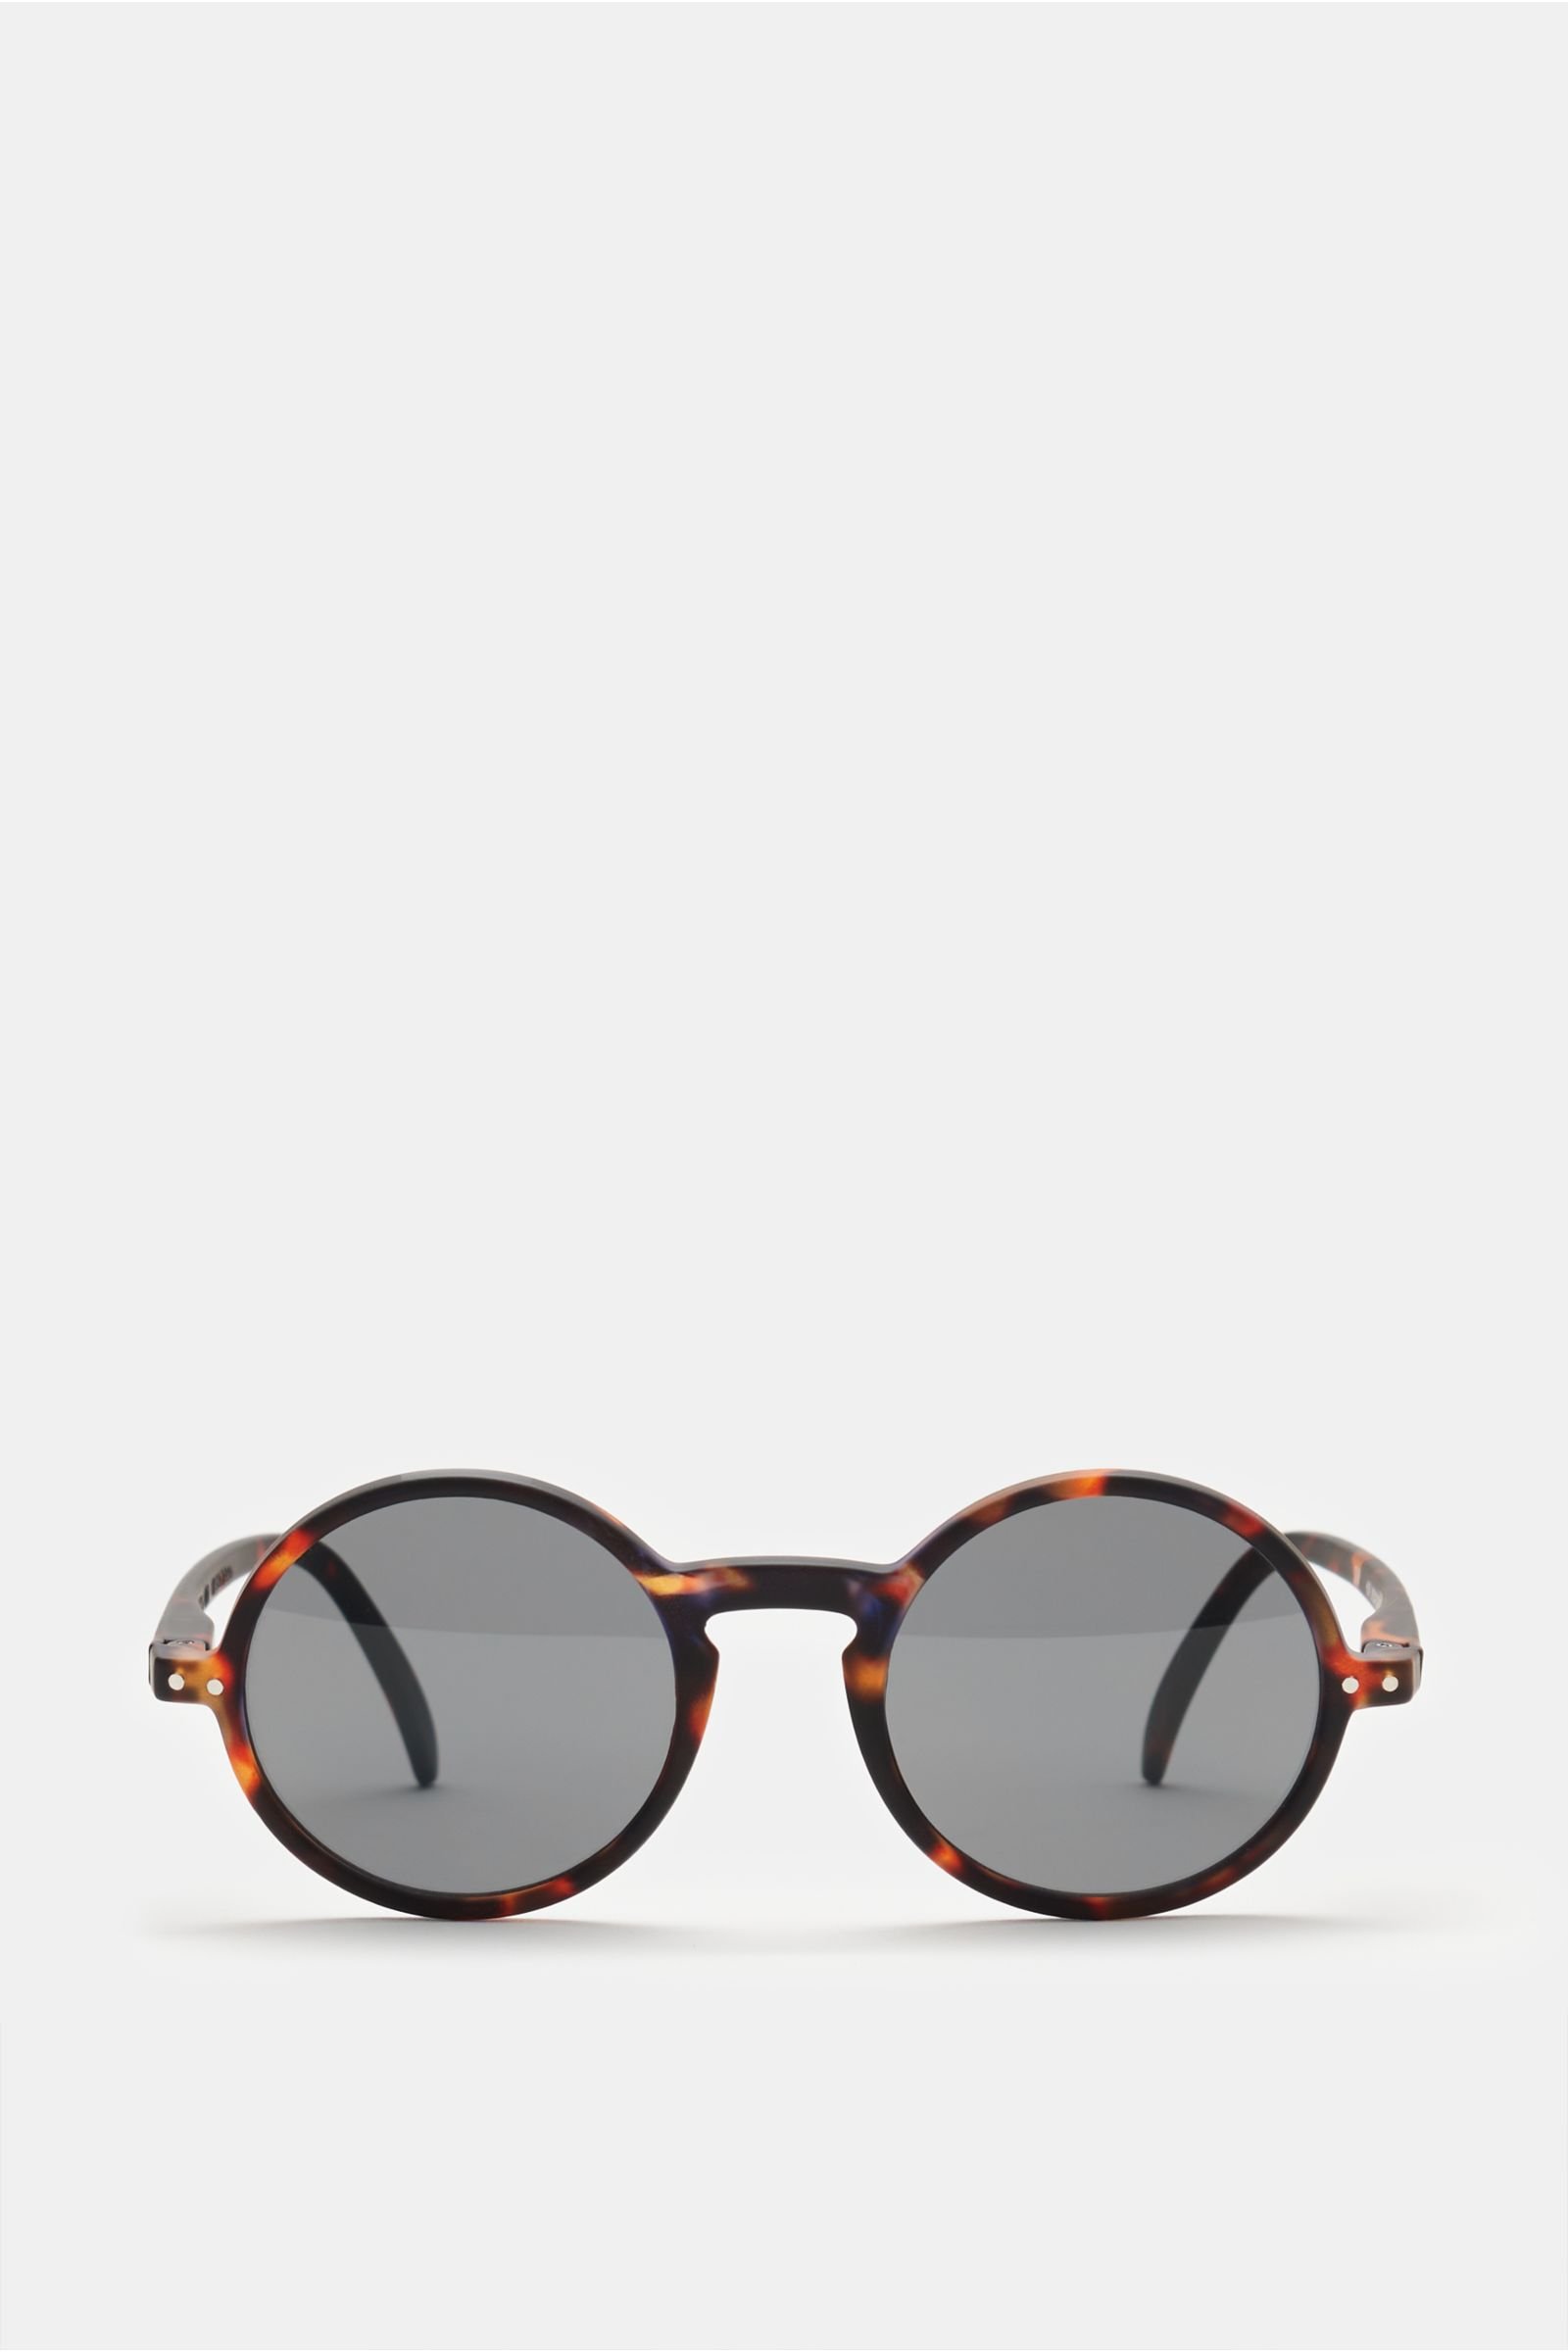 Sunglasses '#G Sun' dark brown/grey patterned